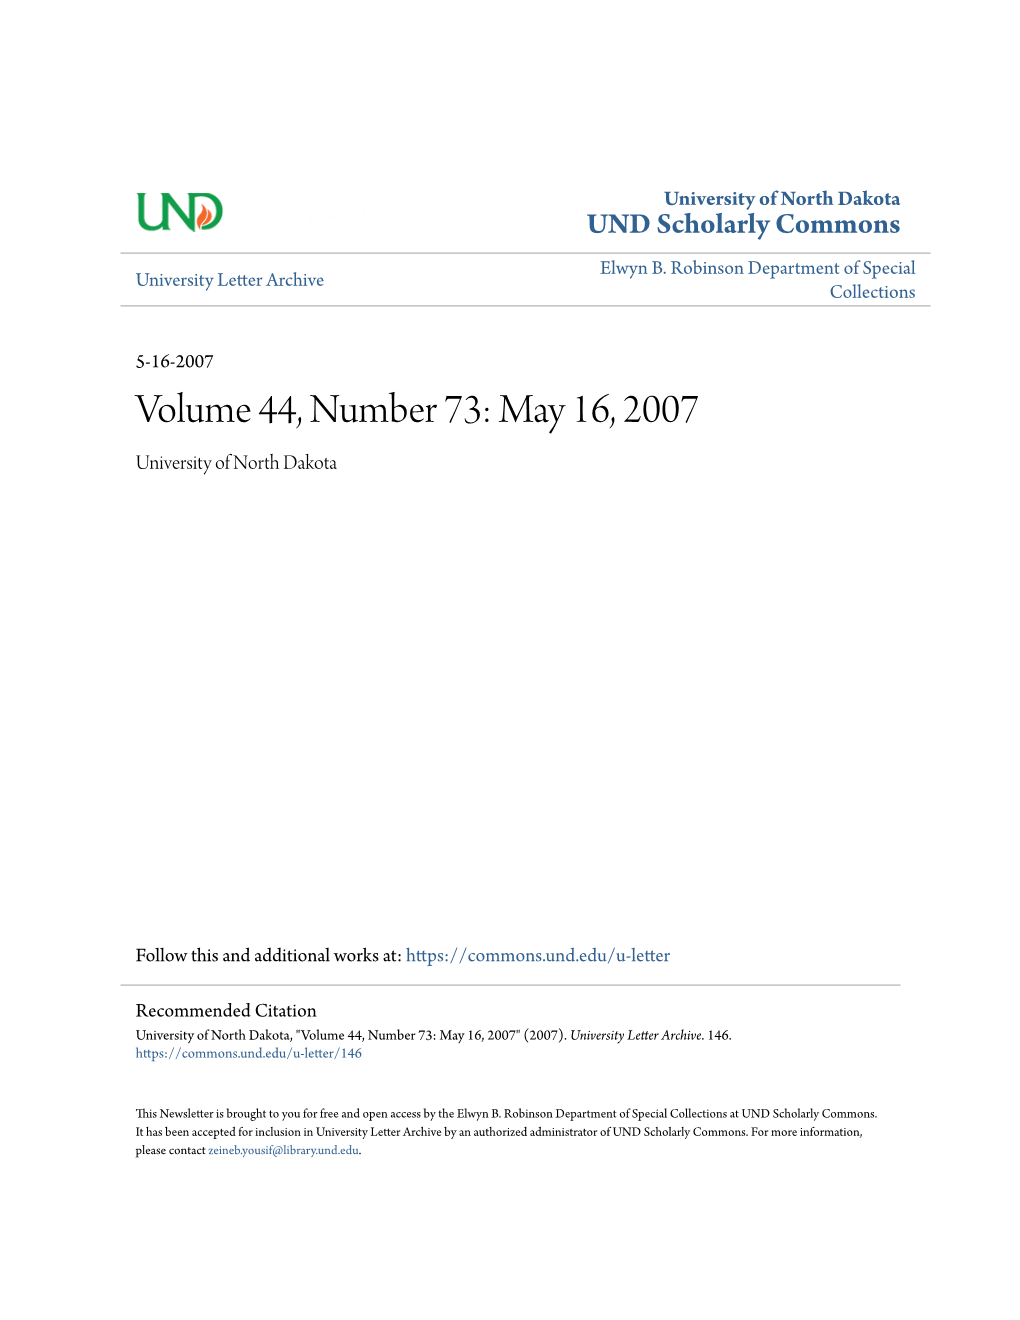 Volume 44, Number 73: May 16, 2007 University of North Dakota